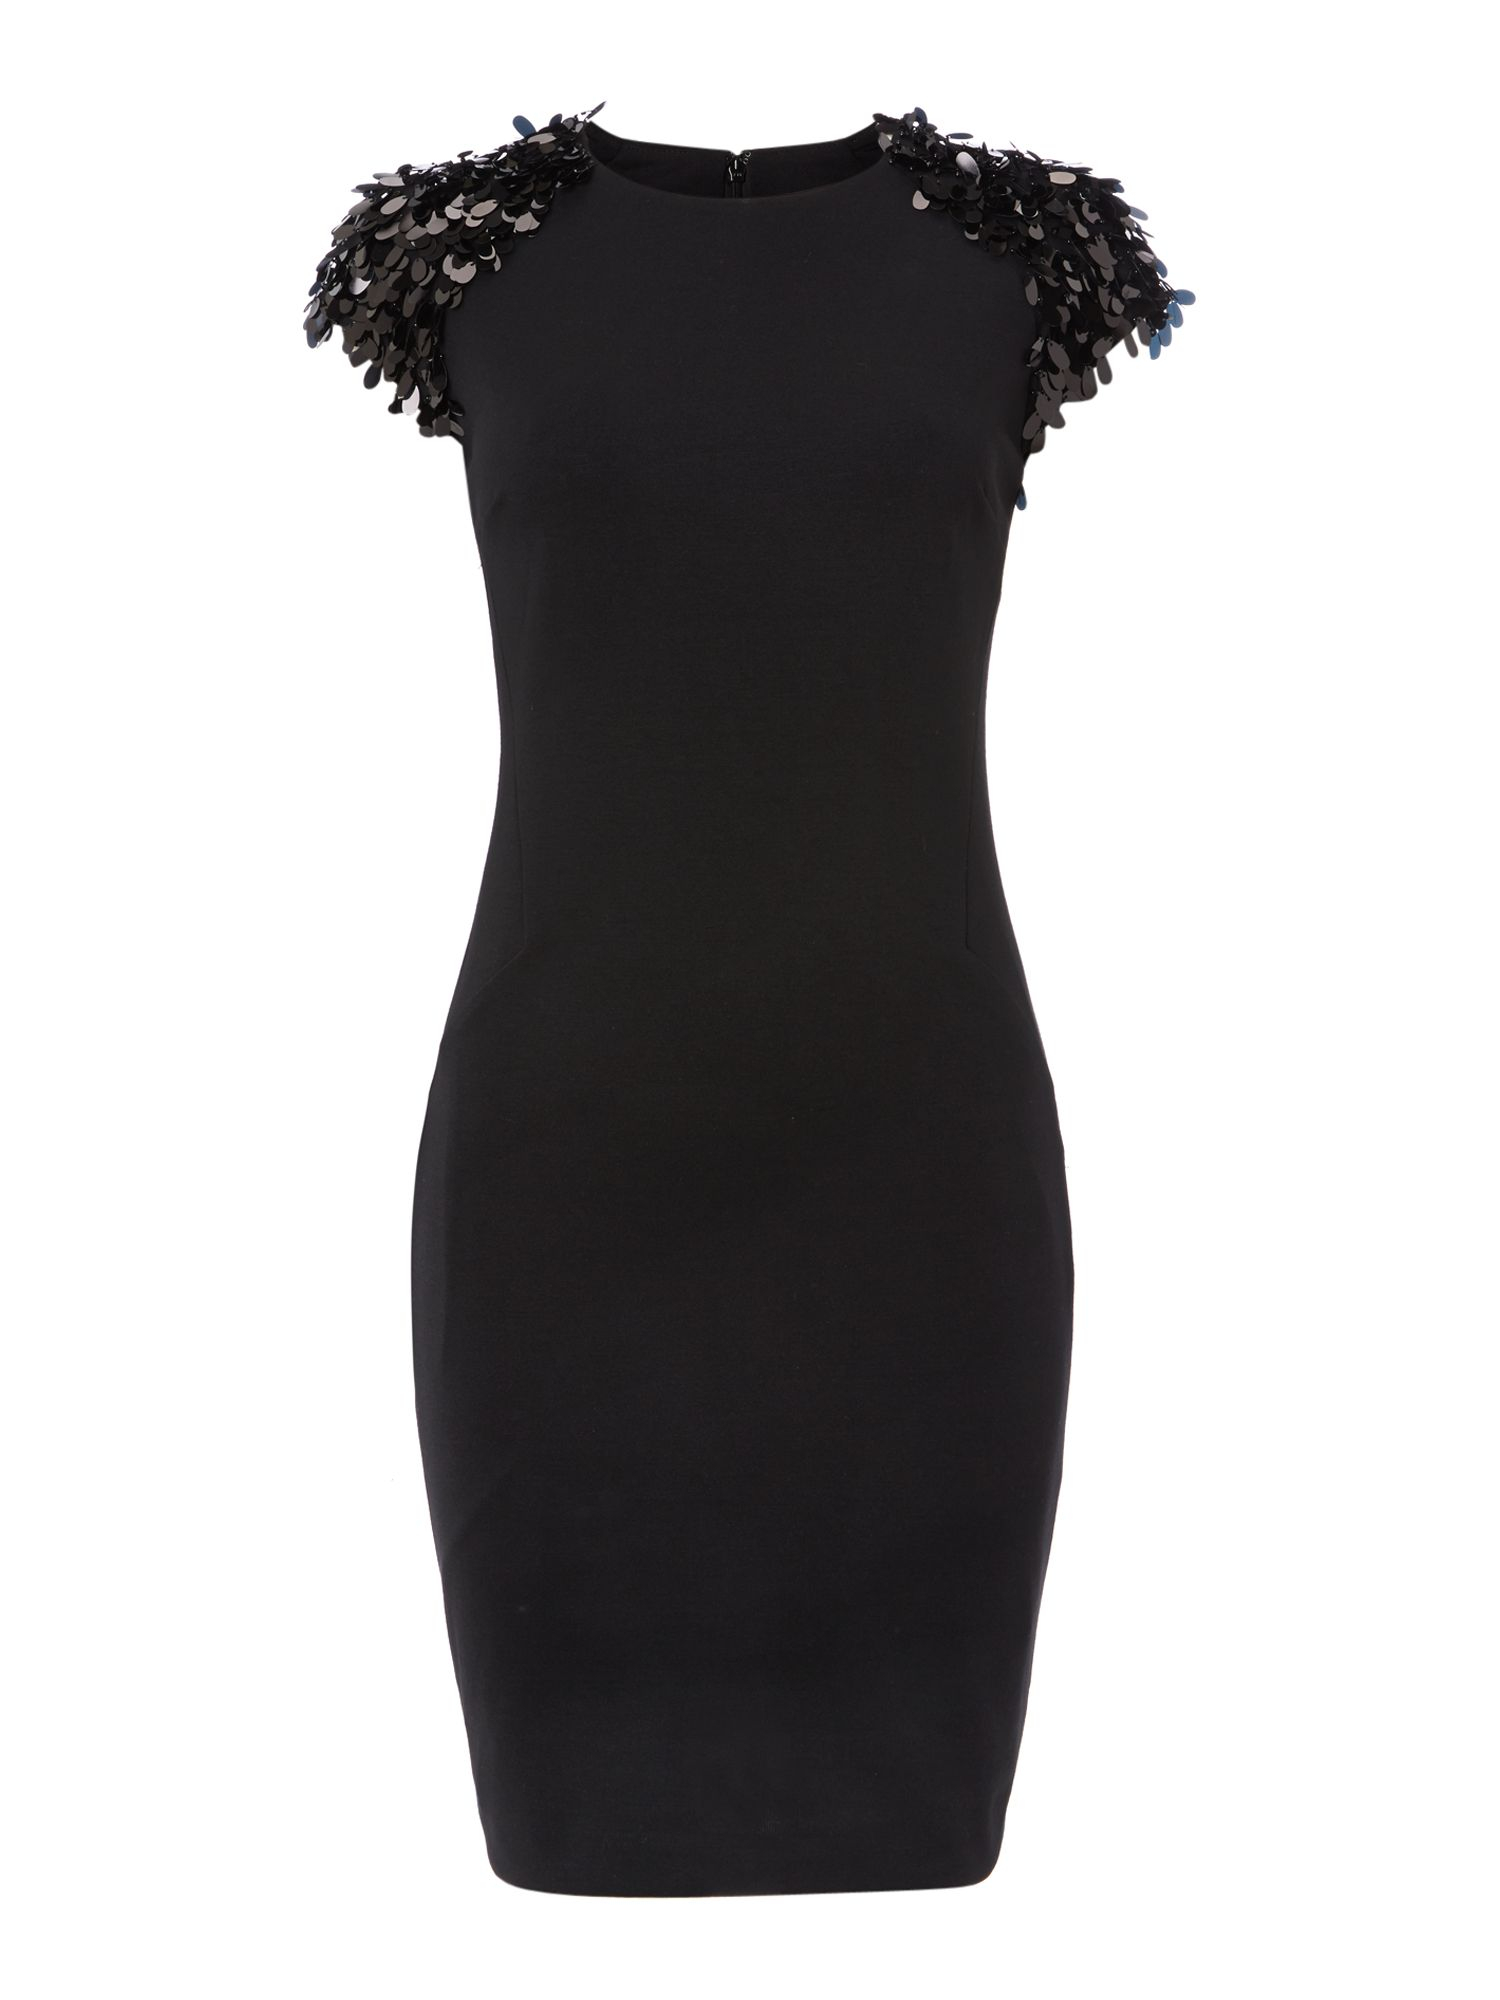 Michael kors Sequin Shoulder Short Sleeve Dress in Black | Lyst